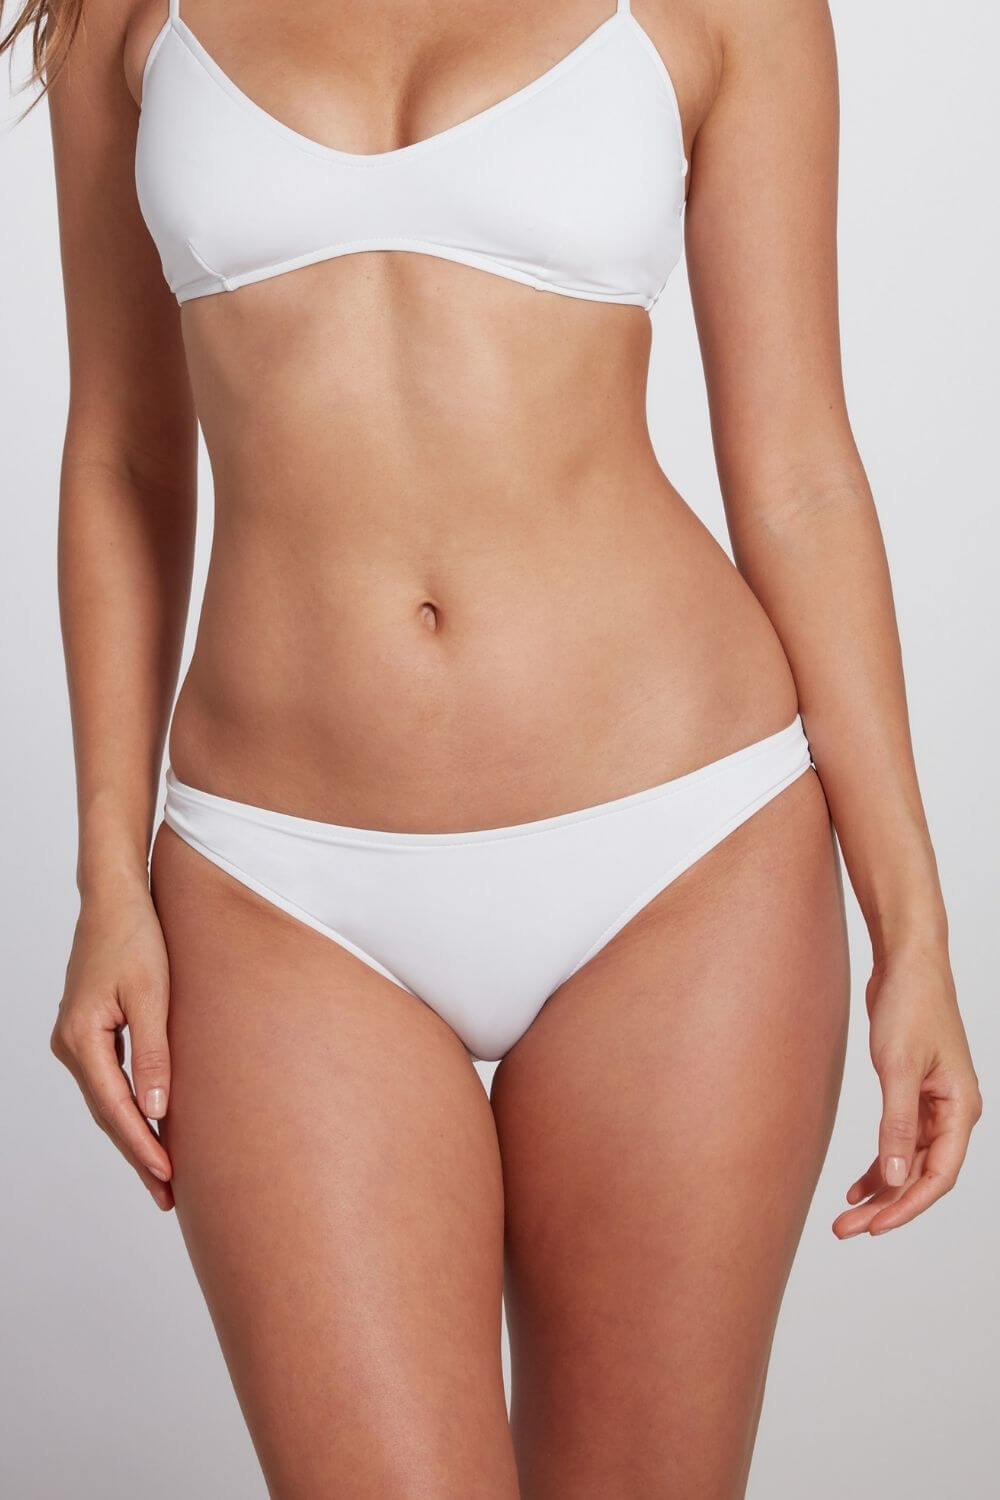 White low rise bikini bottom, the Jenna is a classic brief bikini bottom, great for all sunny occasions.